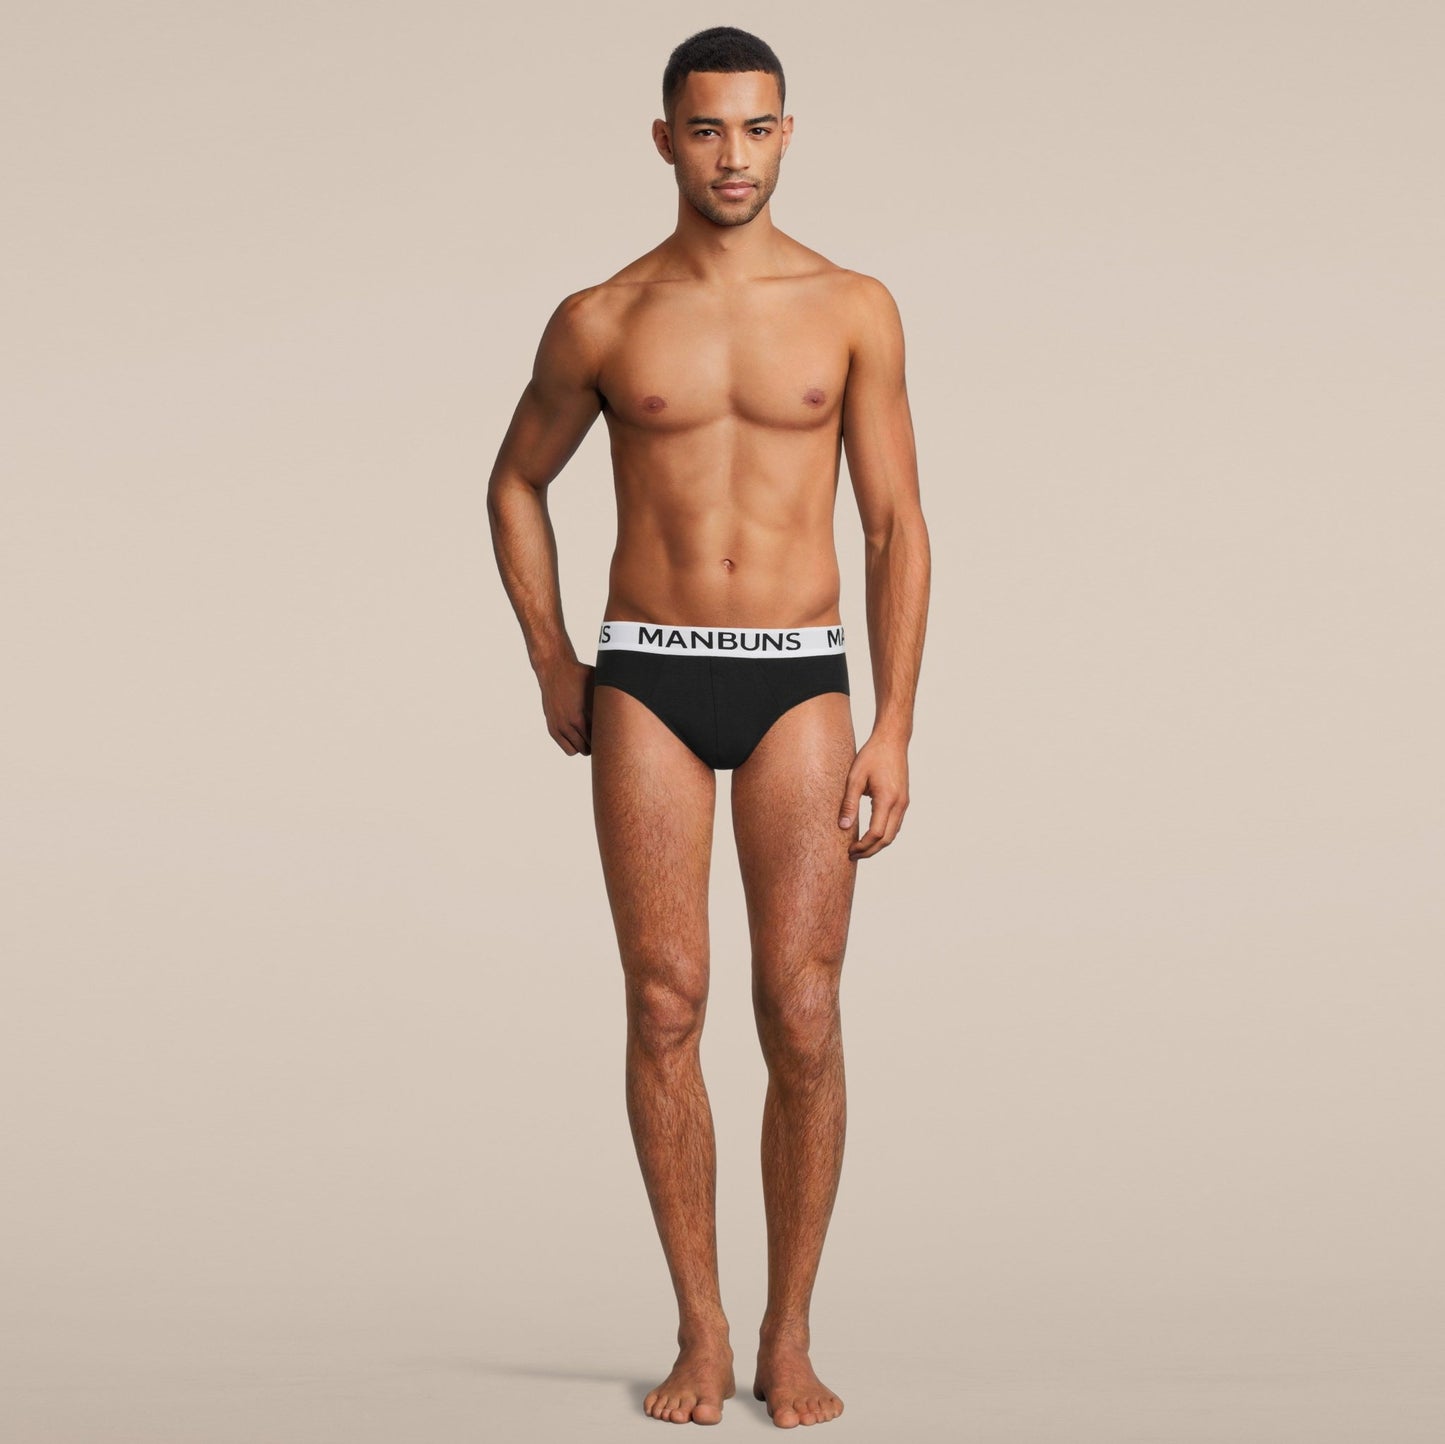 Men's Classic Black Brief Underwear - MANBUNS Underwear & Socks Free Shipping